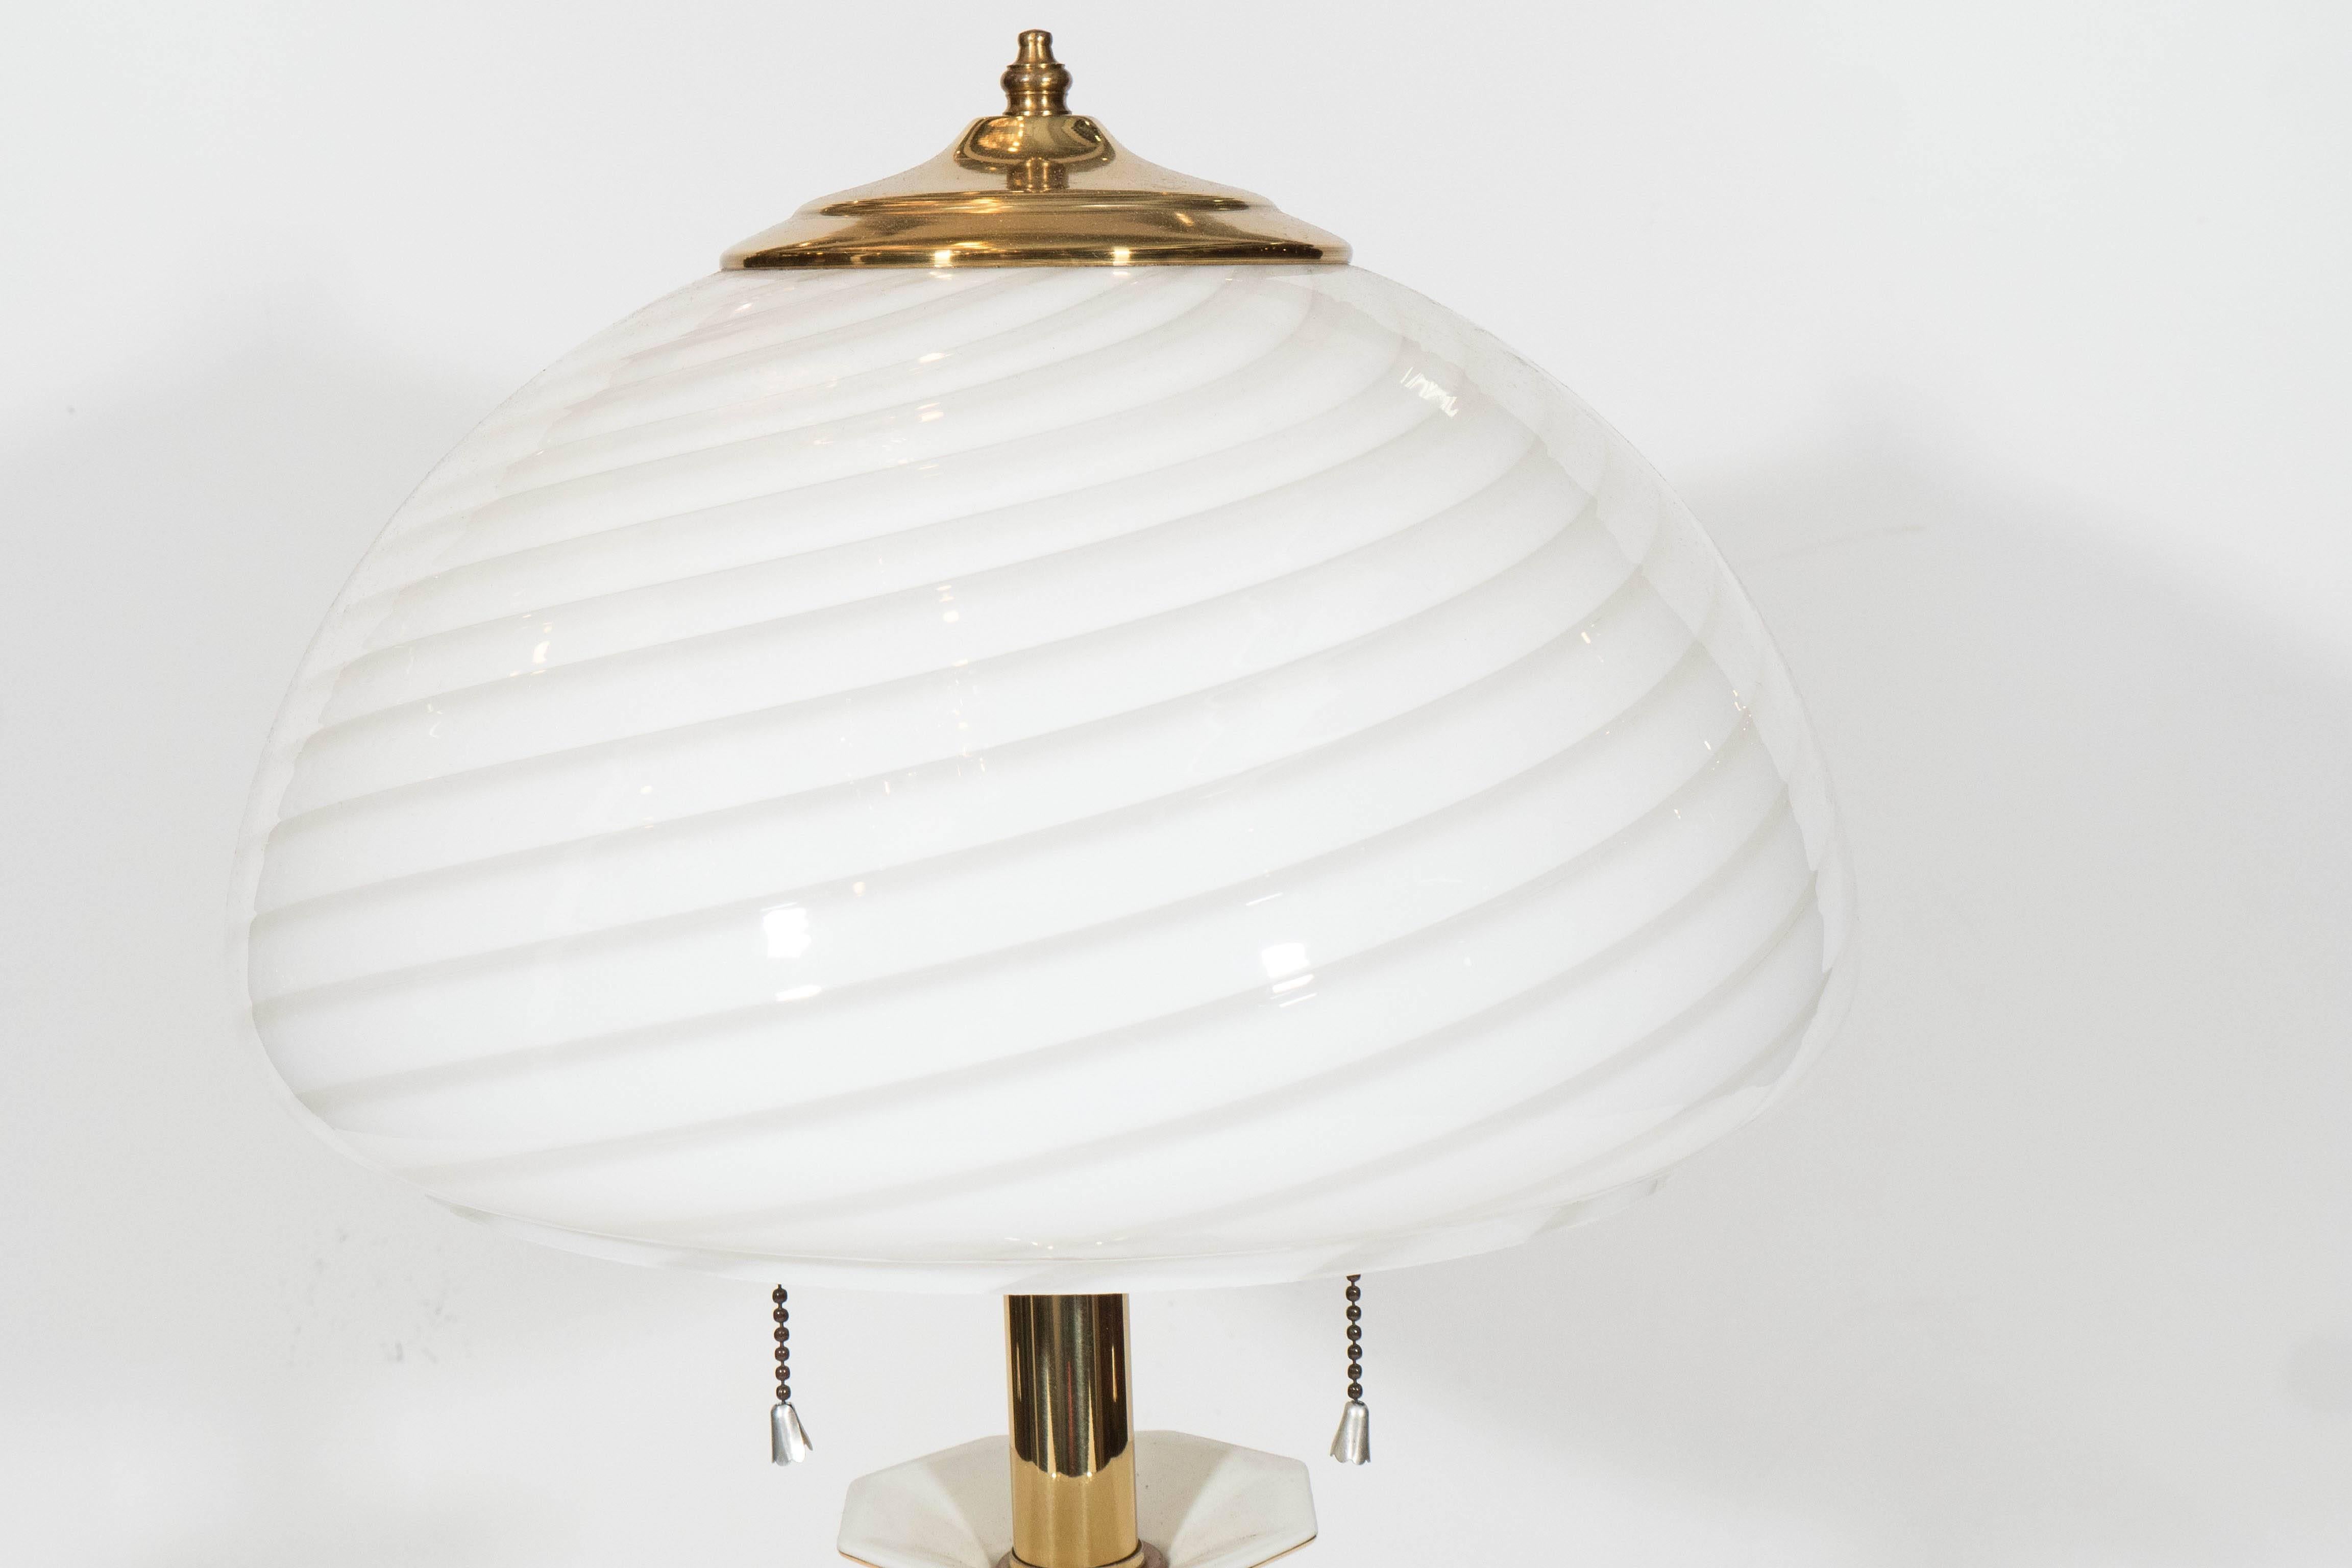 Late 20th Century Swirled Murano Glass Shade Lamp on Ceramic Candlestick Base